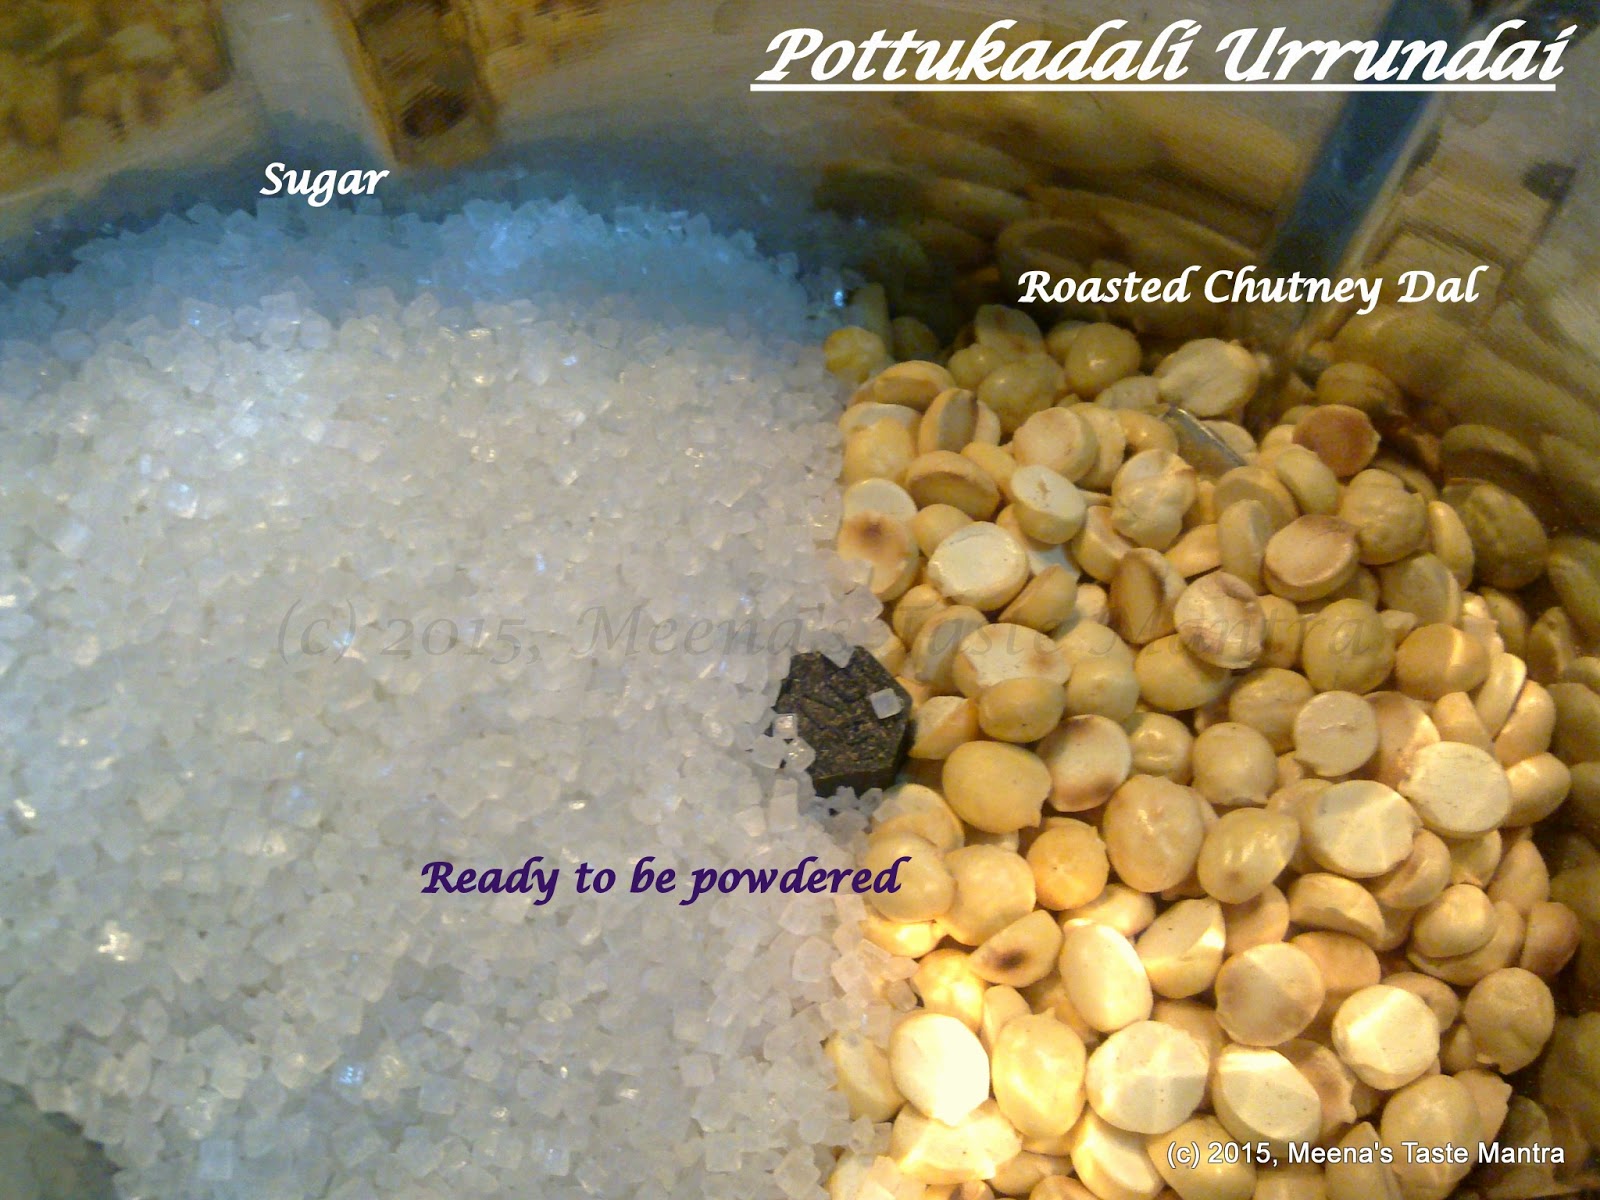 Pottukadalai Urrundai | Maa Ladoo - Sugar and Roasted Chana Dal to be ground